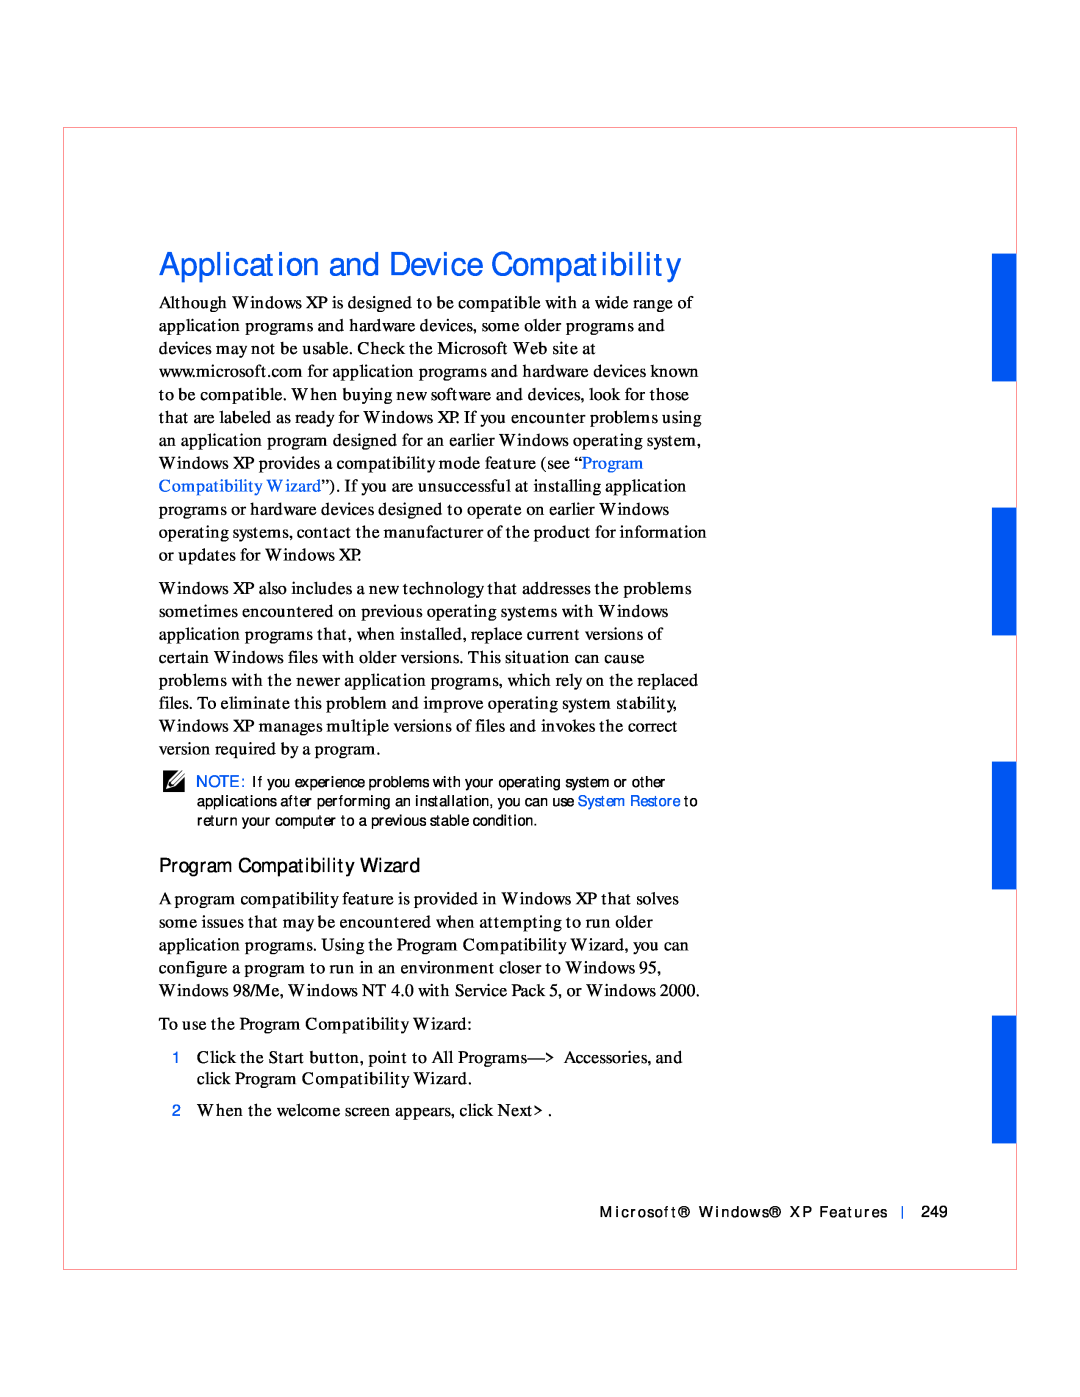 Dell GX240 manual Application and Device Compatibility, Program Compatibility Wizard 